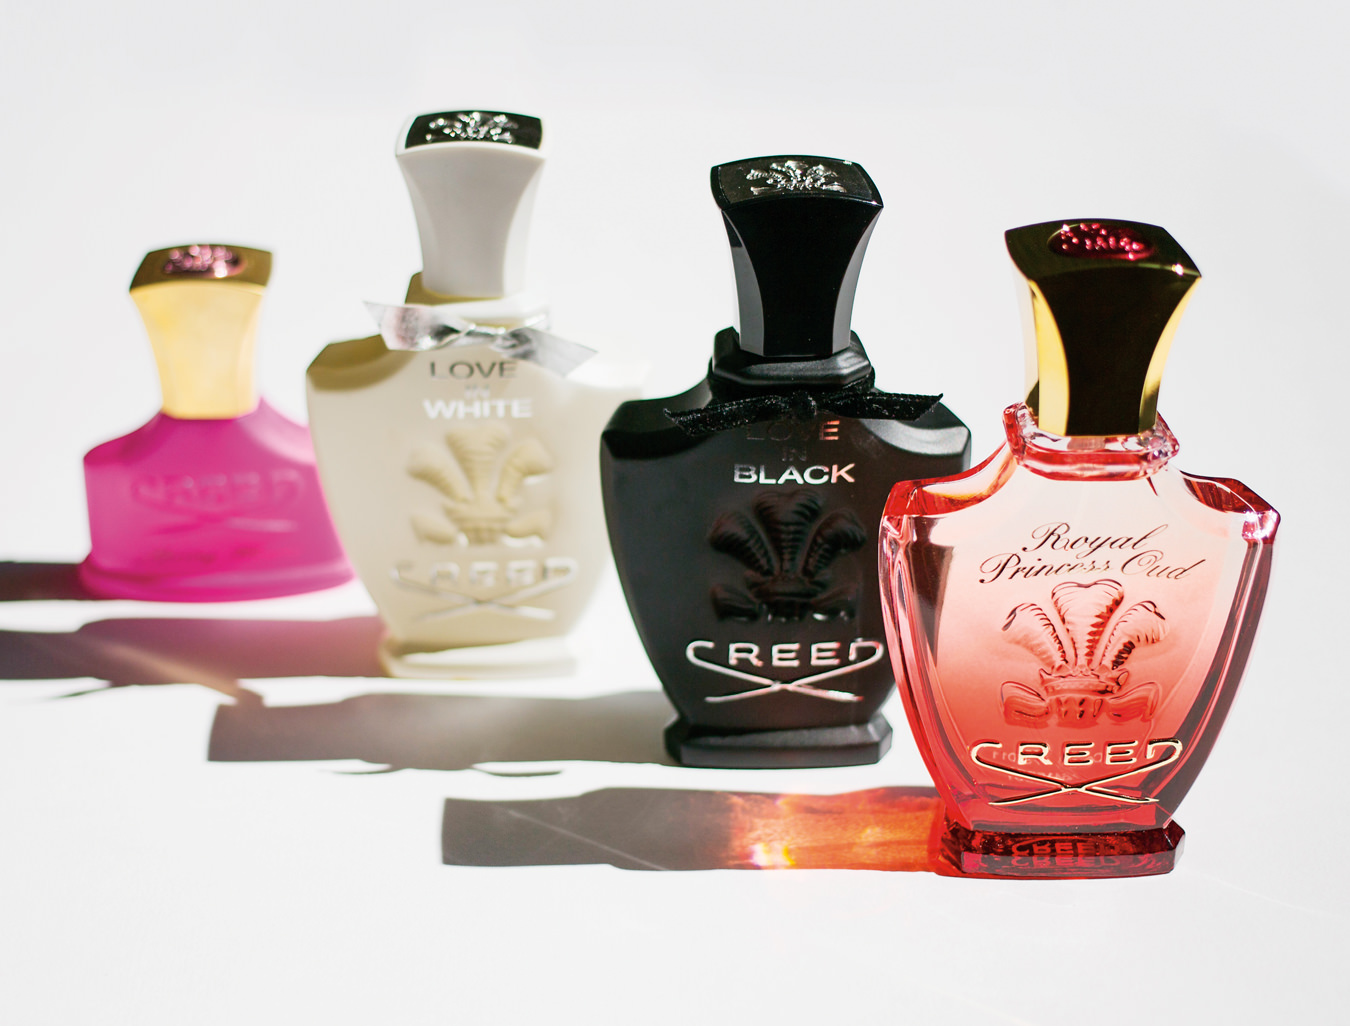 NUVO winter 2015: Perfumers Creed, FYI Beauty